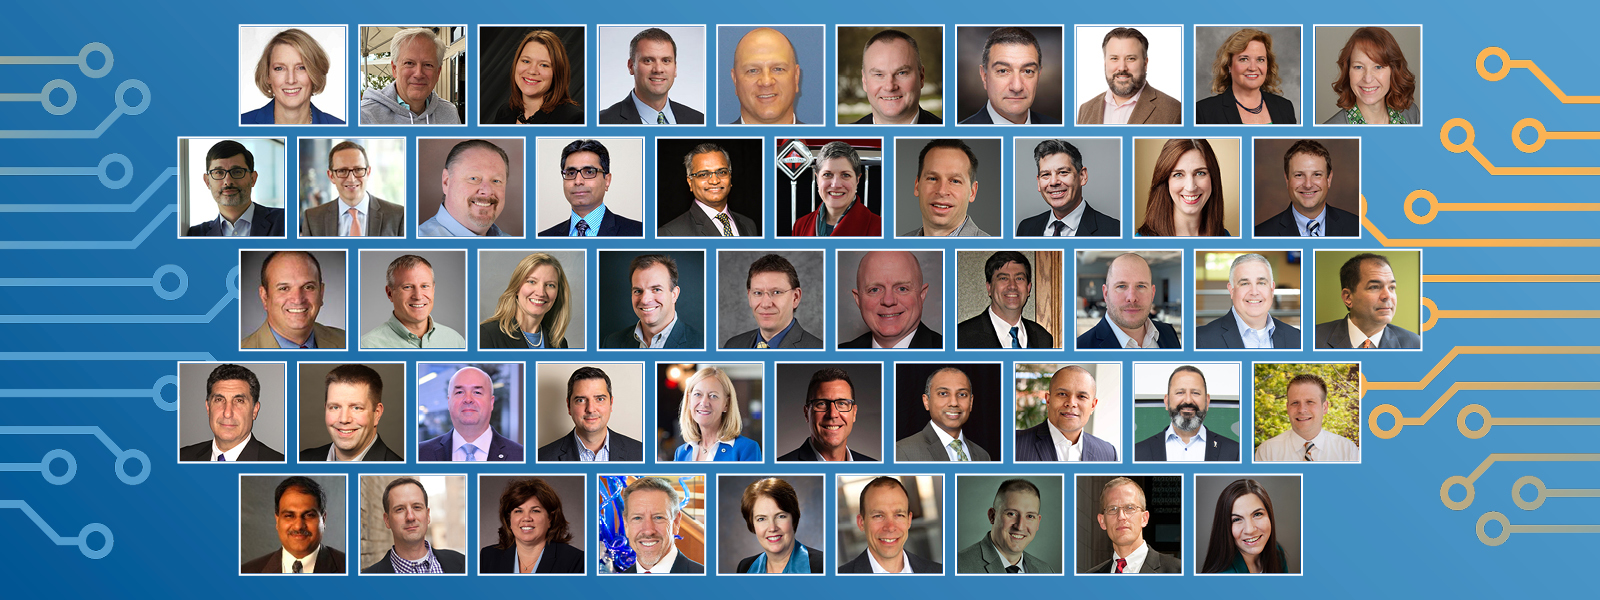 2022 CIO Forum CIO's headshot collage